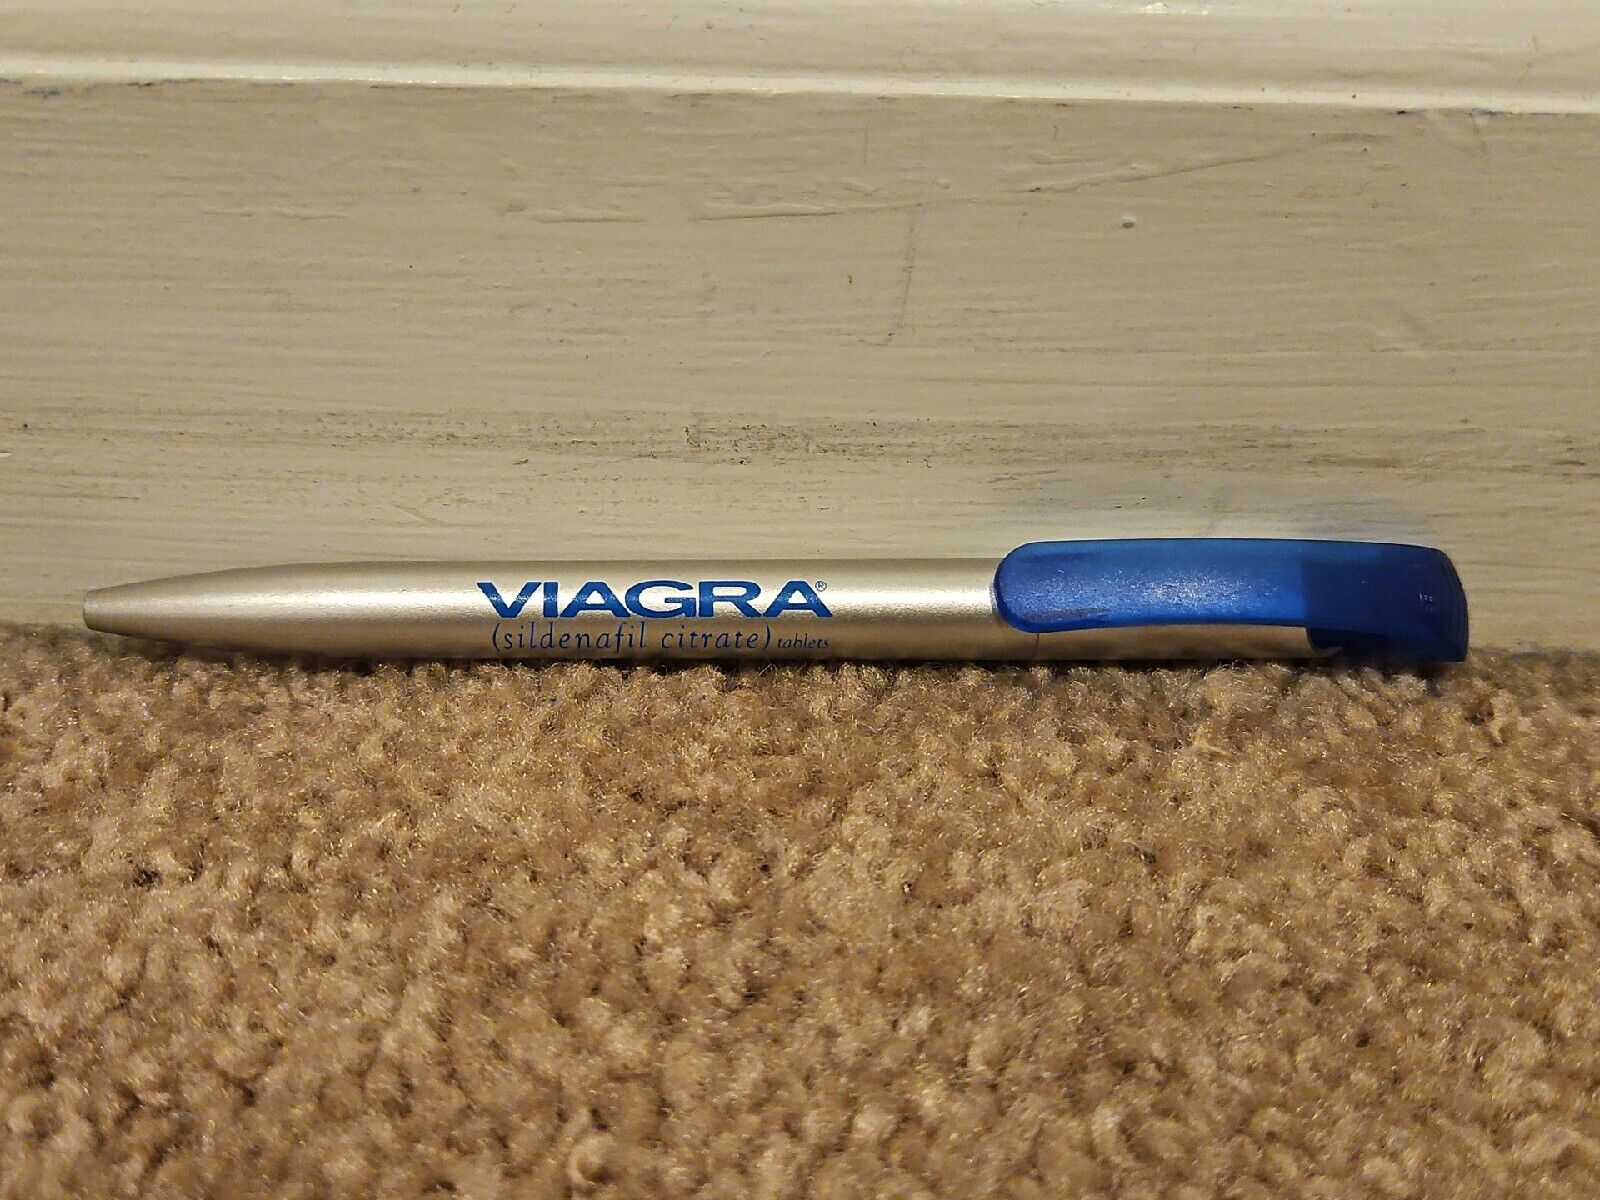 Viagra Pen Drug Rep Promo Silver/Blue Metal Pen